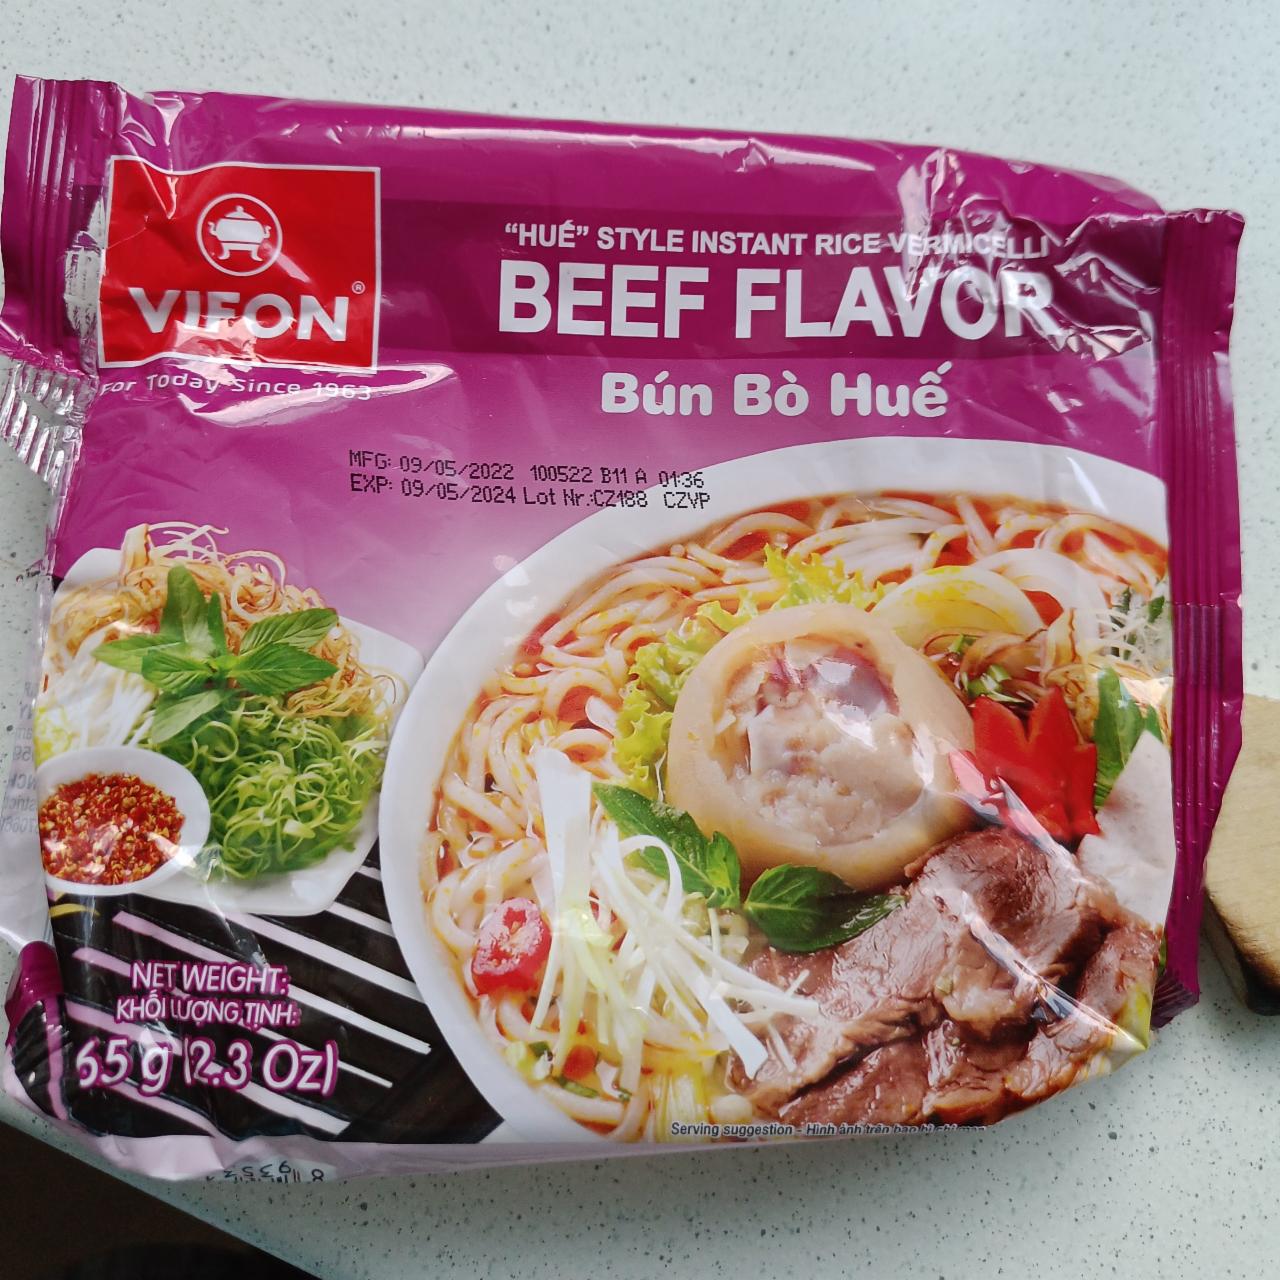 Fotografie - Bún Bo Hué Beef flavor Vifon